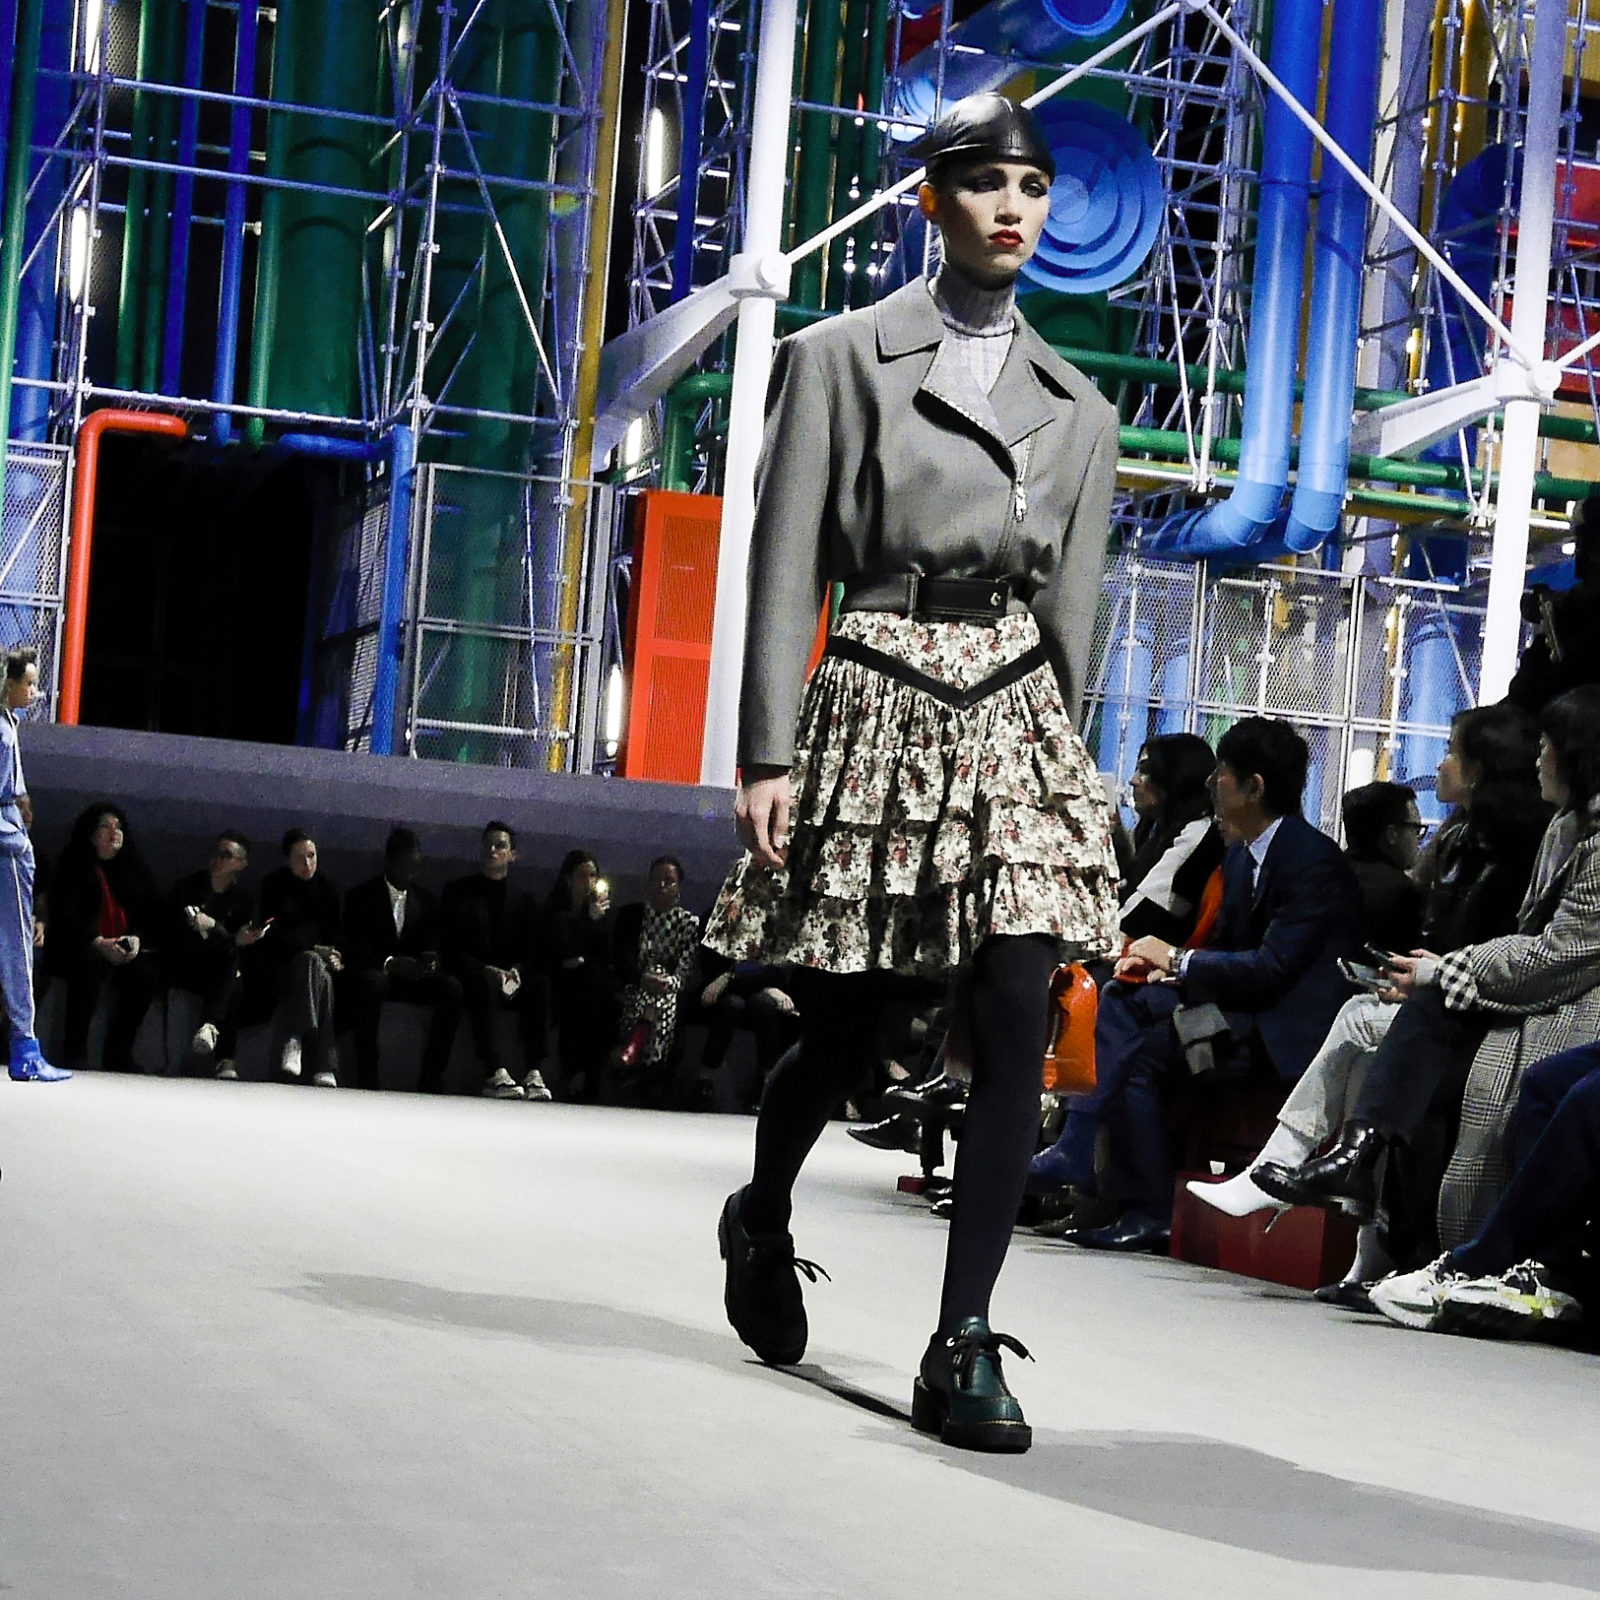 Paris Fashion Week Wraps With Star-Laden Louis Vuitton Show – The